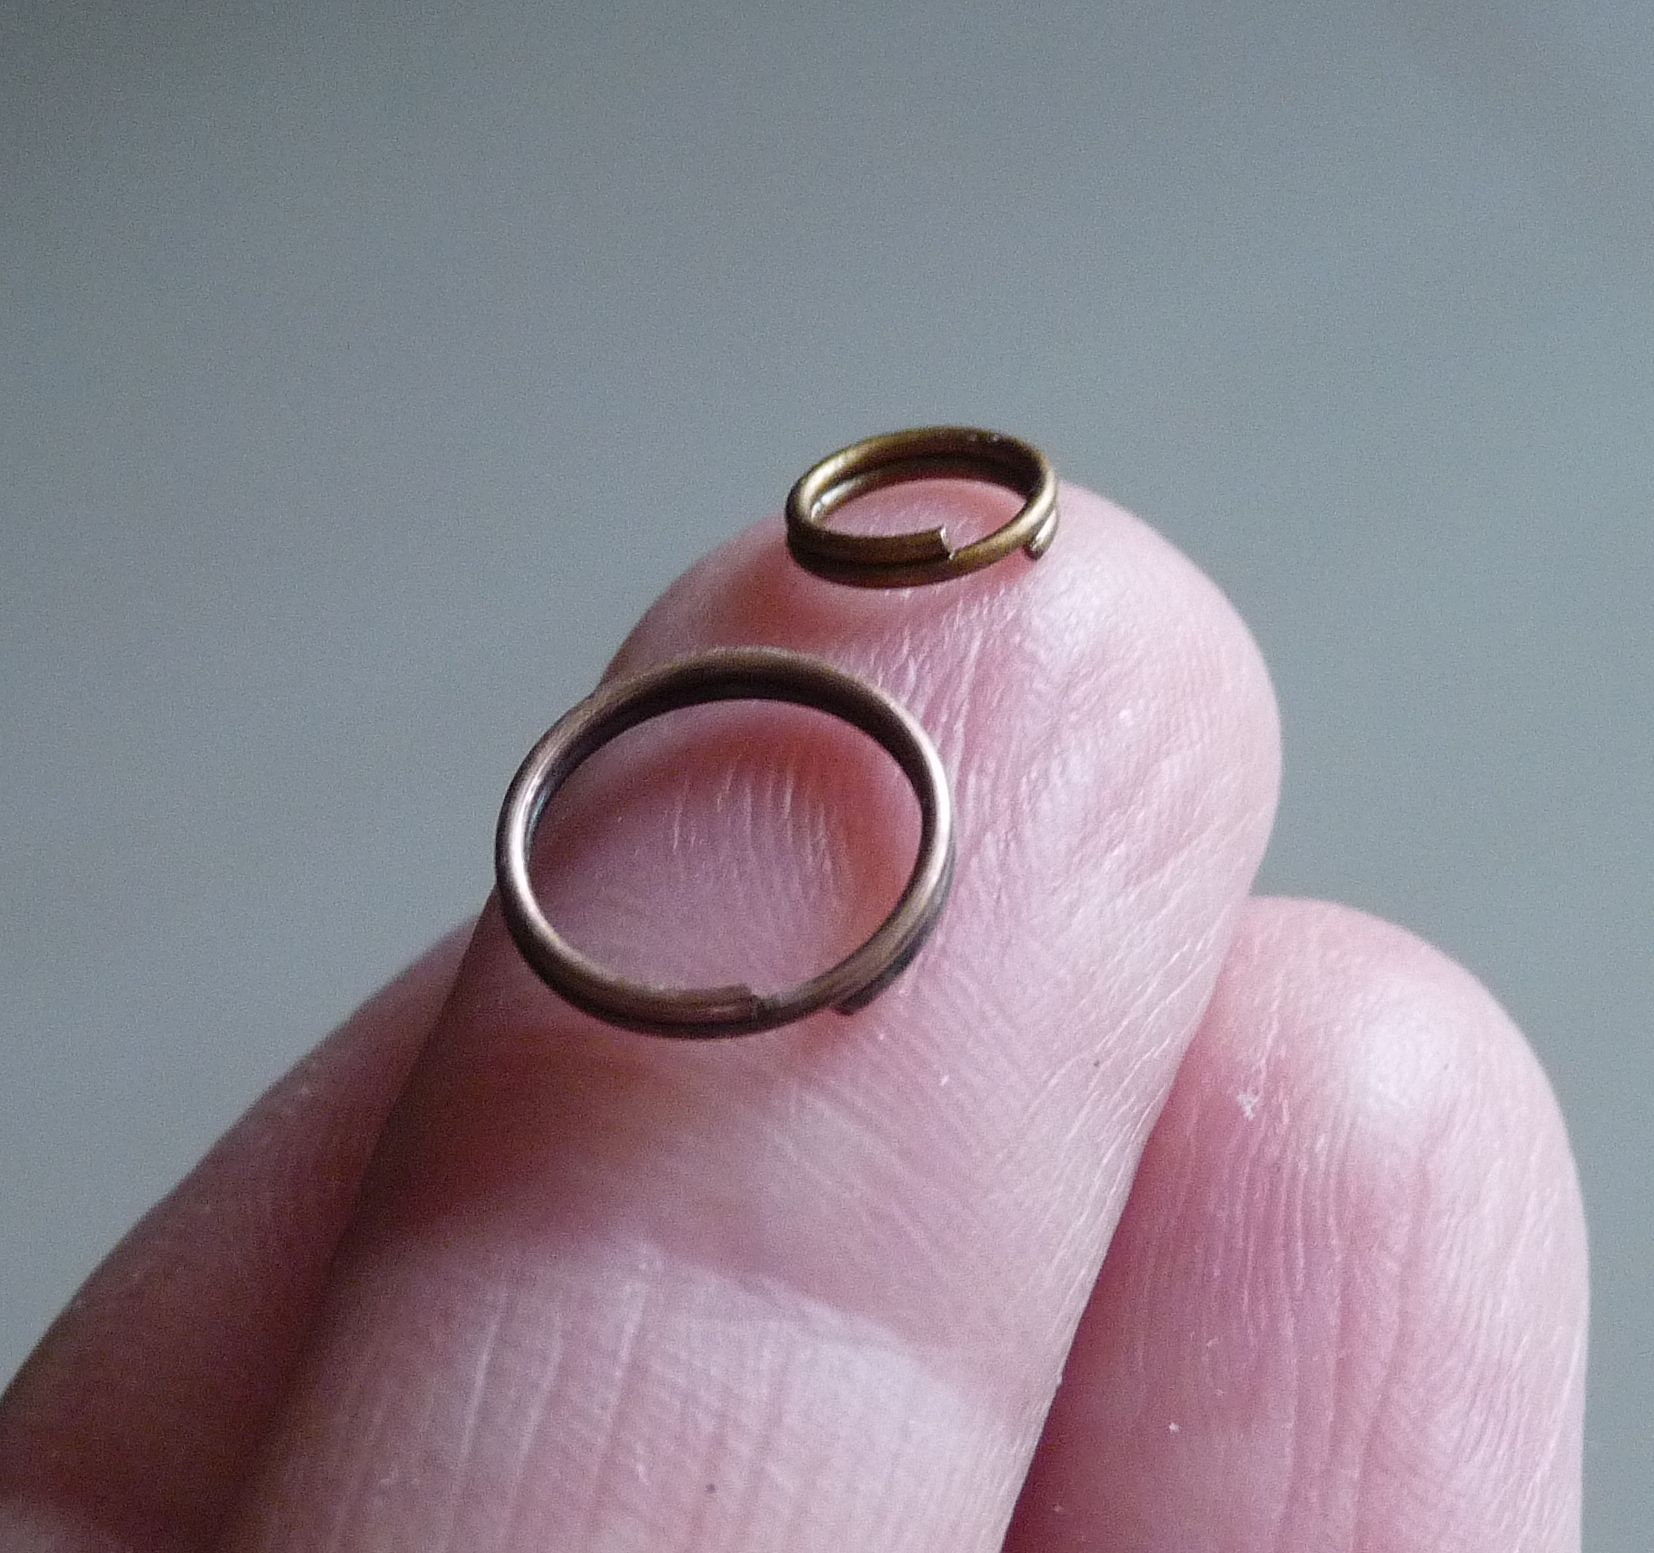 Fine Weight 18 Gauge Copper Jump Rings JSR18 Solid Copper Jewelry Find –  Celtic Copper Shop